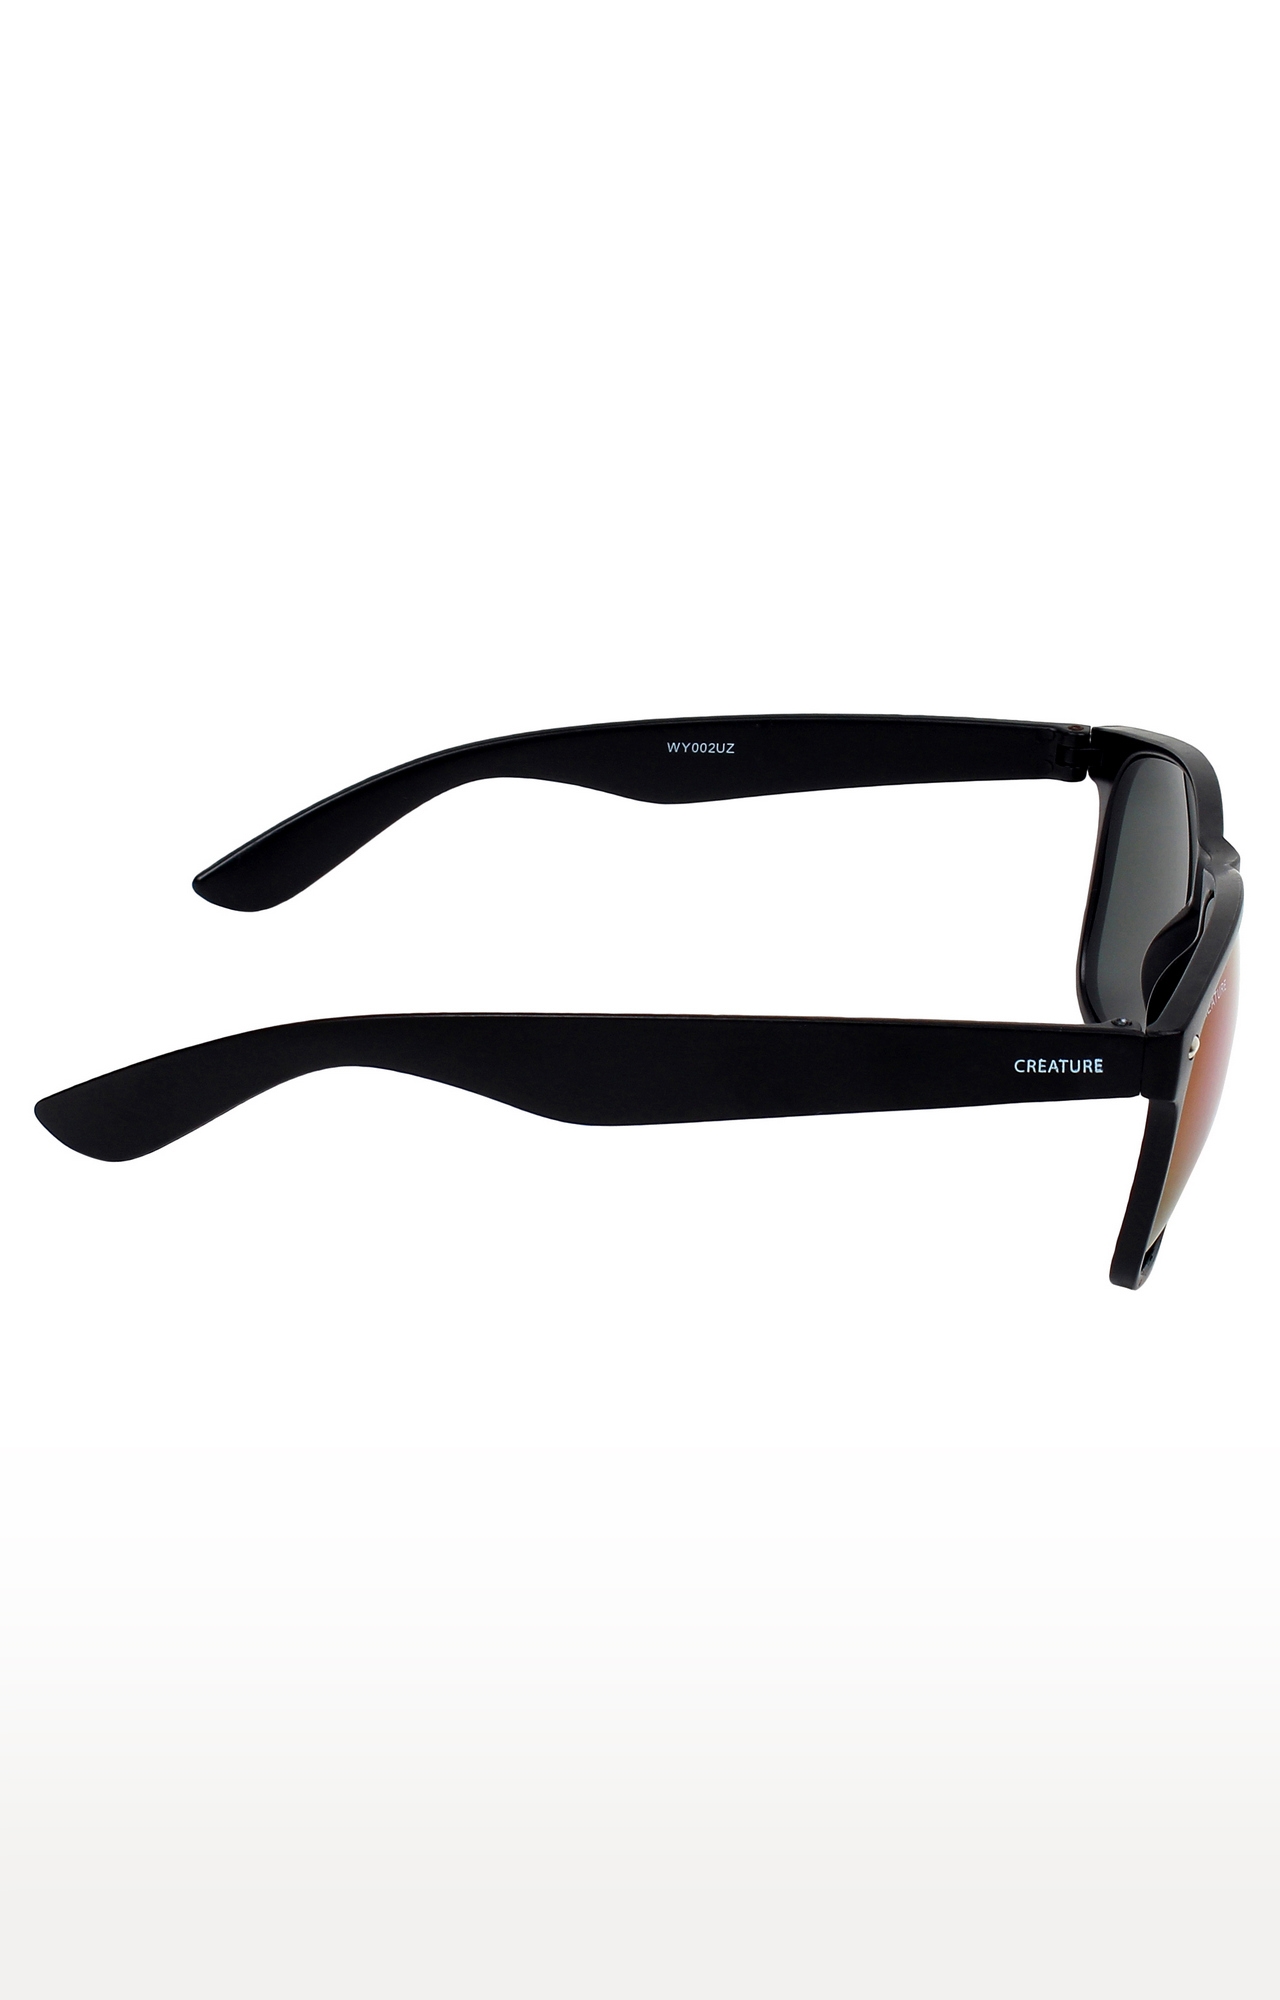 CREATURE | CREATURE Black Matte Finish UV Protected Unisex Sunglasses (Lens-Blue|Frame-Black) 3